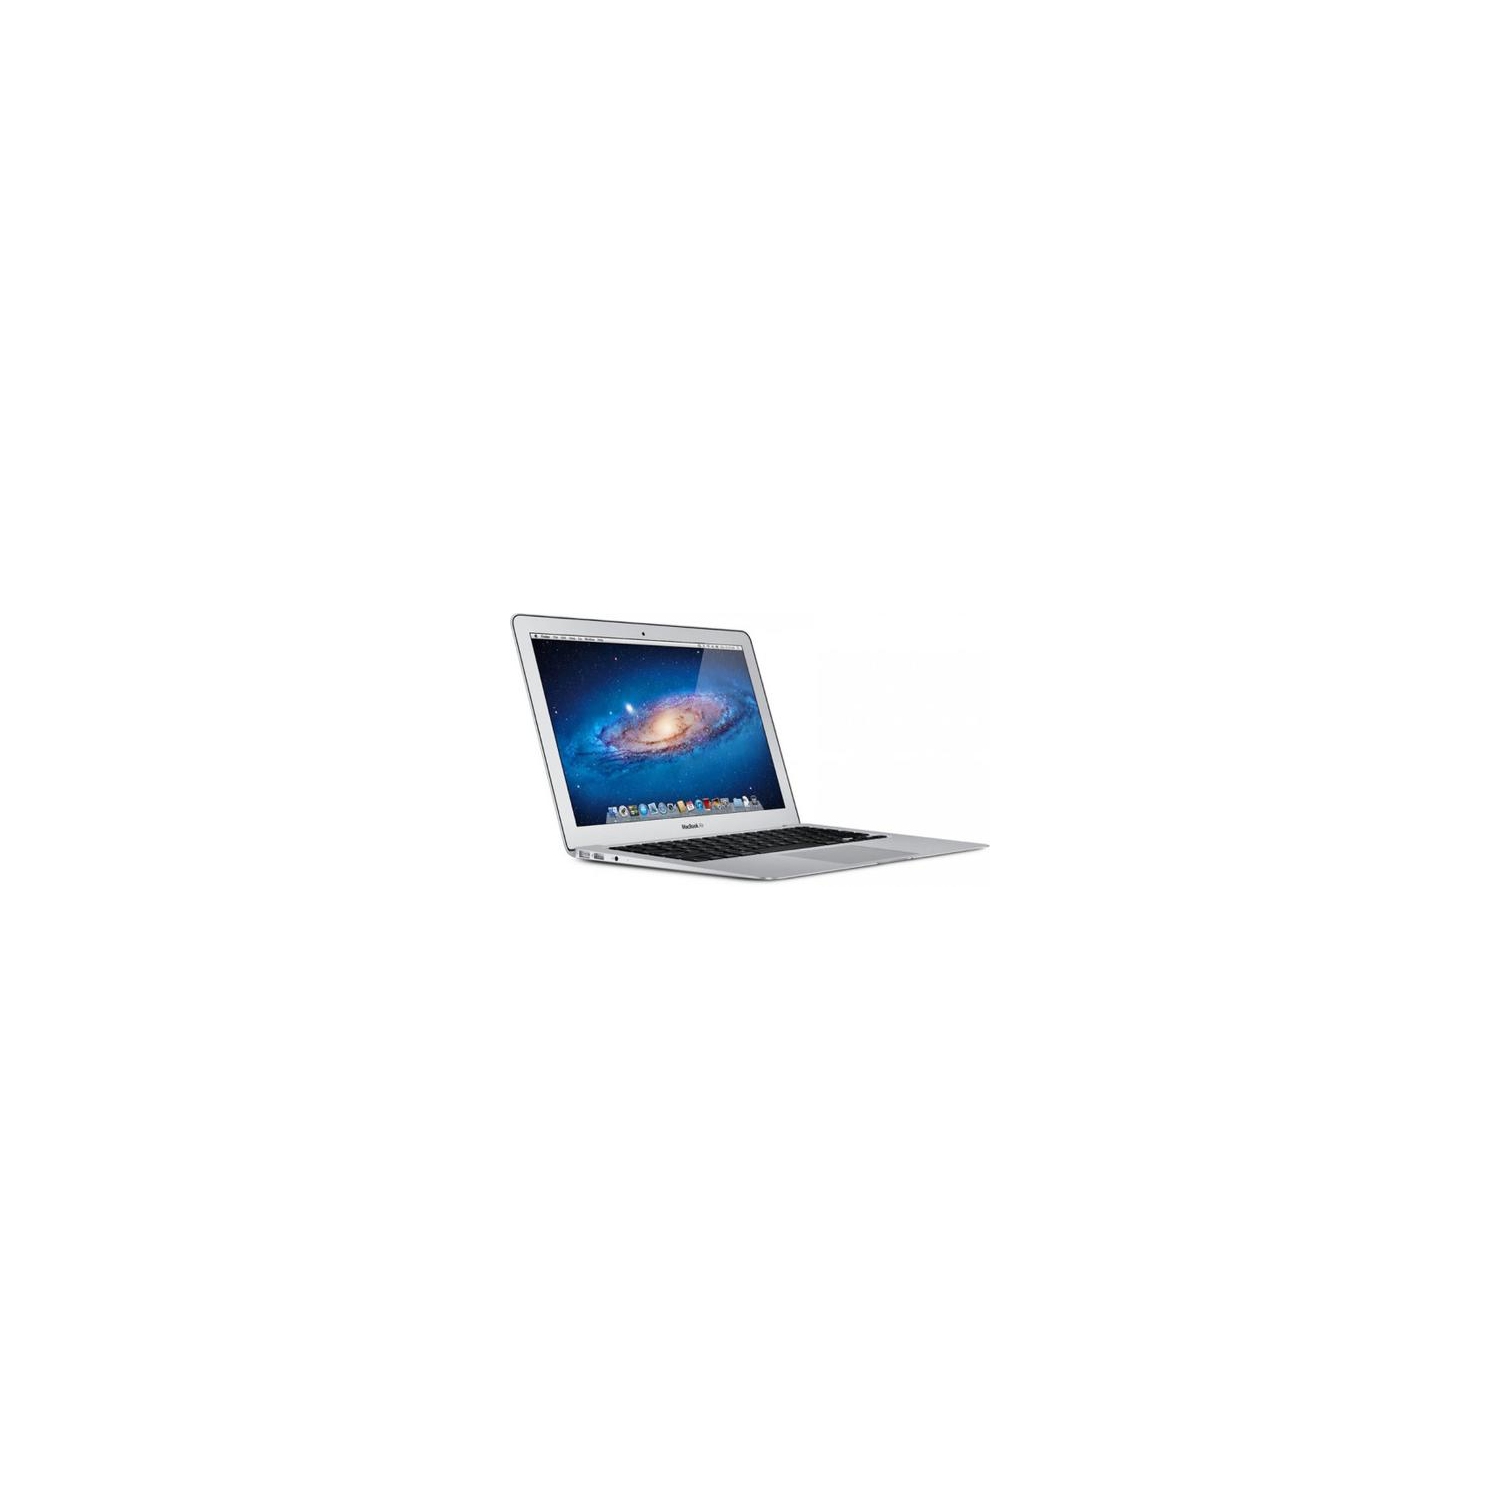 Refurbished (Excellent) - Apple Macbook Air 11" - Intel Core i5-4260U 1.4GHz, 4GB RAM, 128GB SSD - 2014 Model - A1465 / MD711LL/B